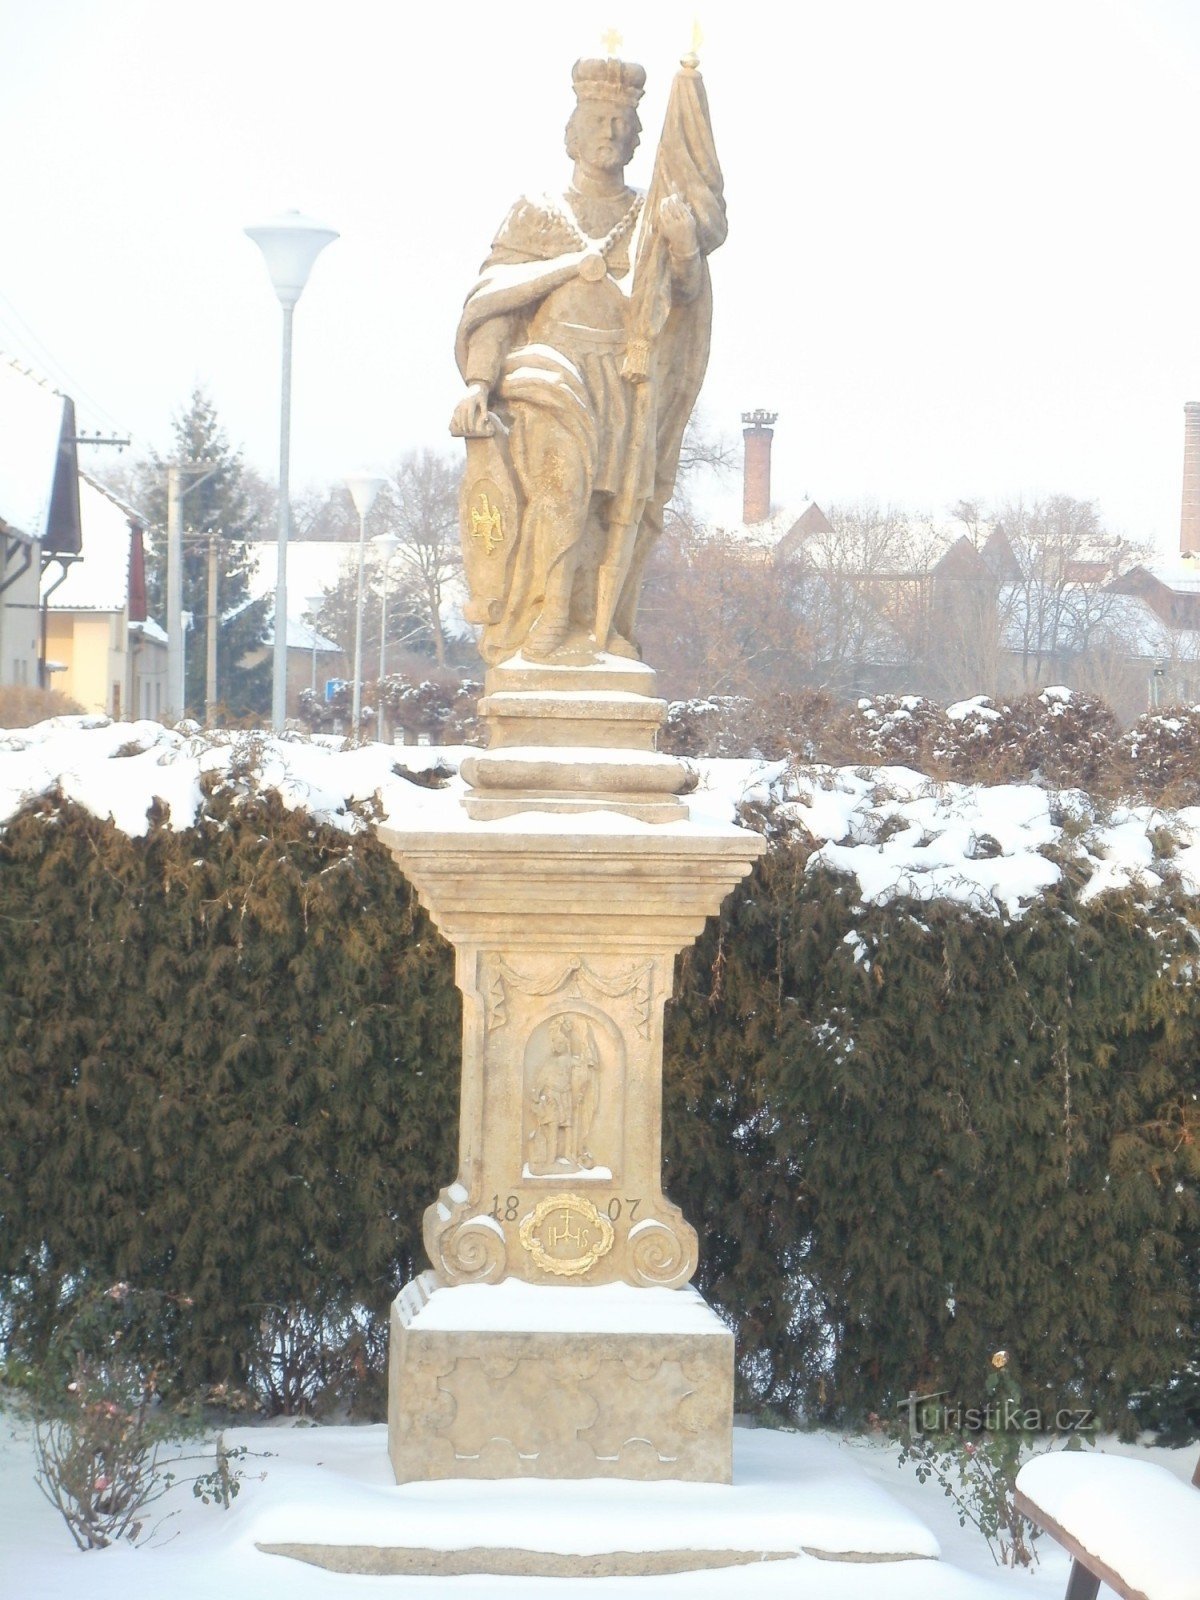 Chlumec nad Cidlinou - un monument cu o statuie a Sf. Wenceslas